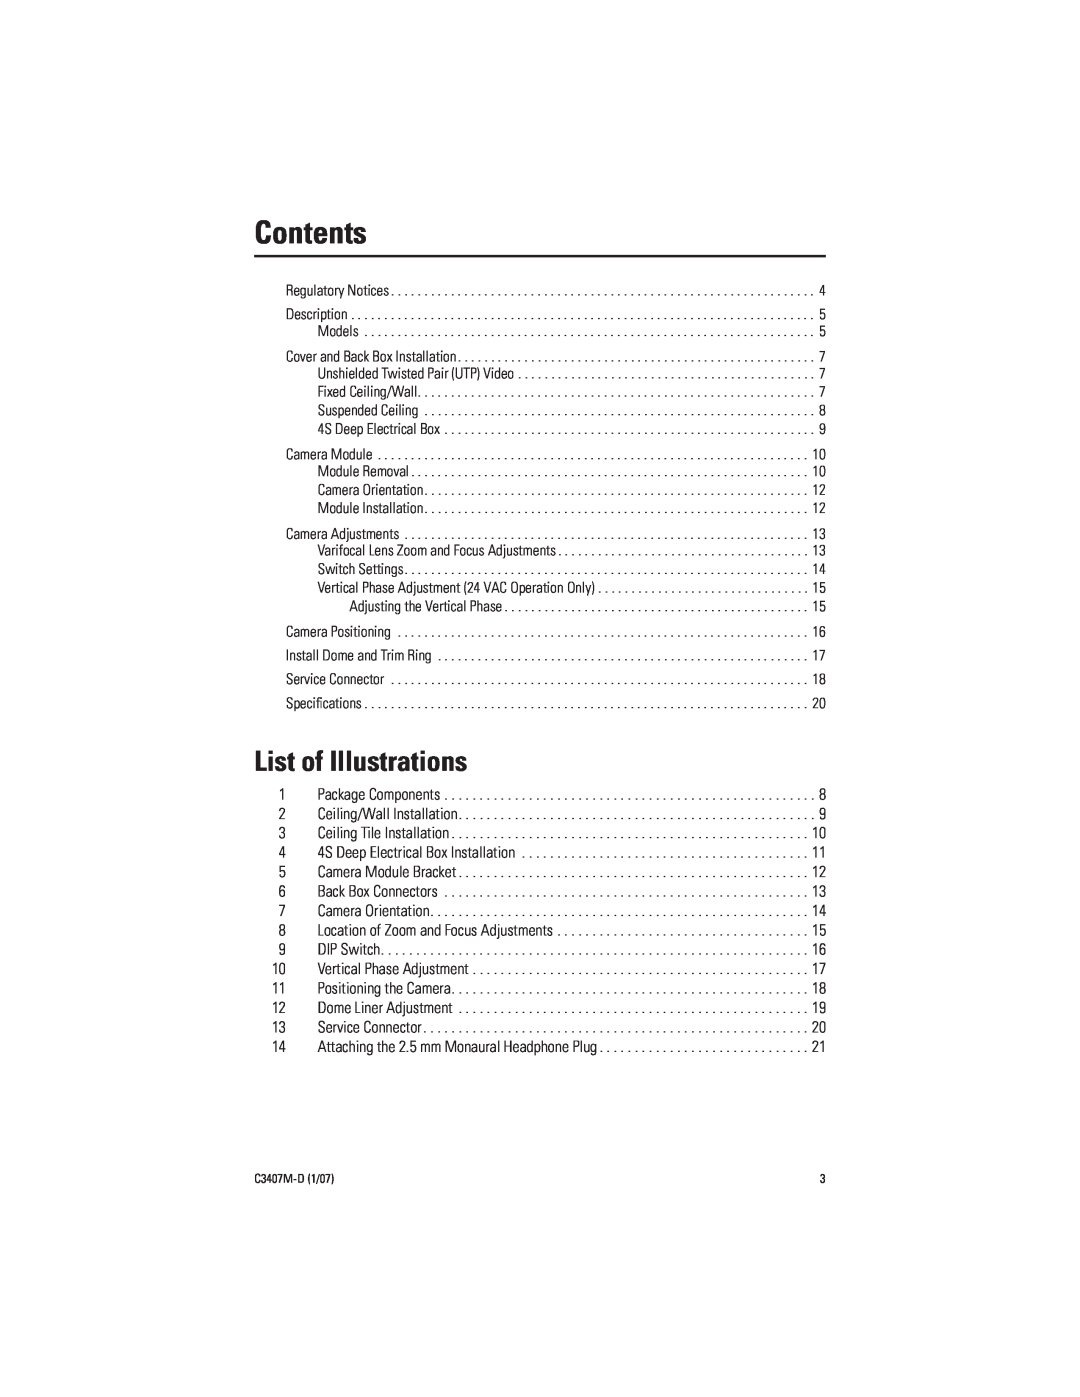 Pelco C3407M-D manual List of Illustrations, Contents 